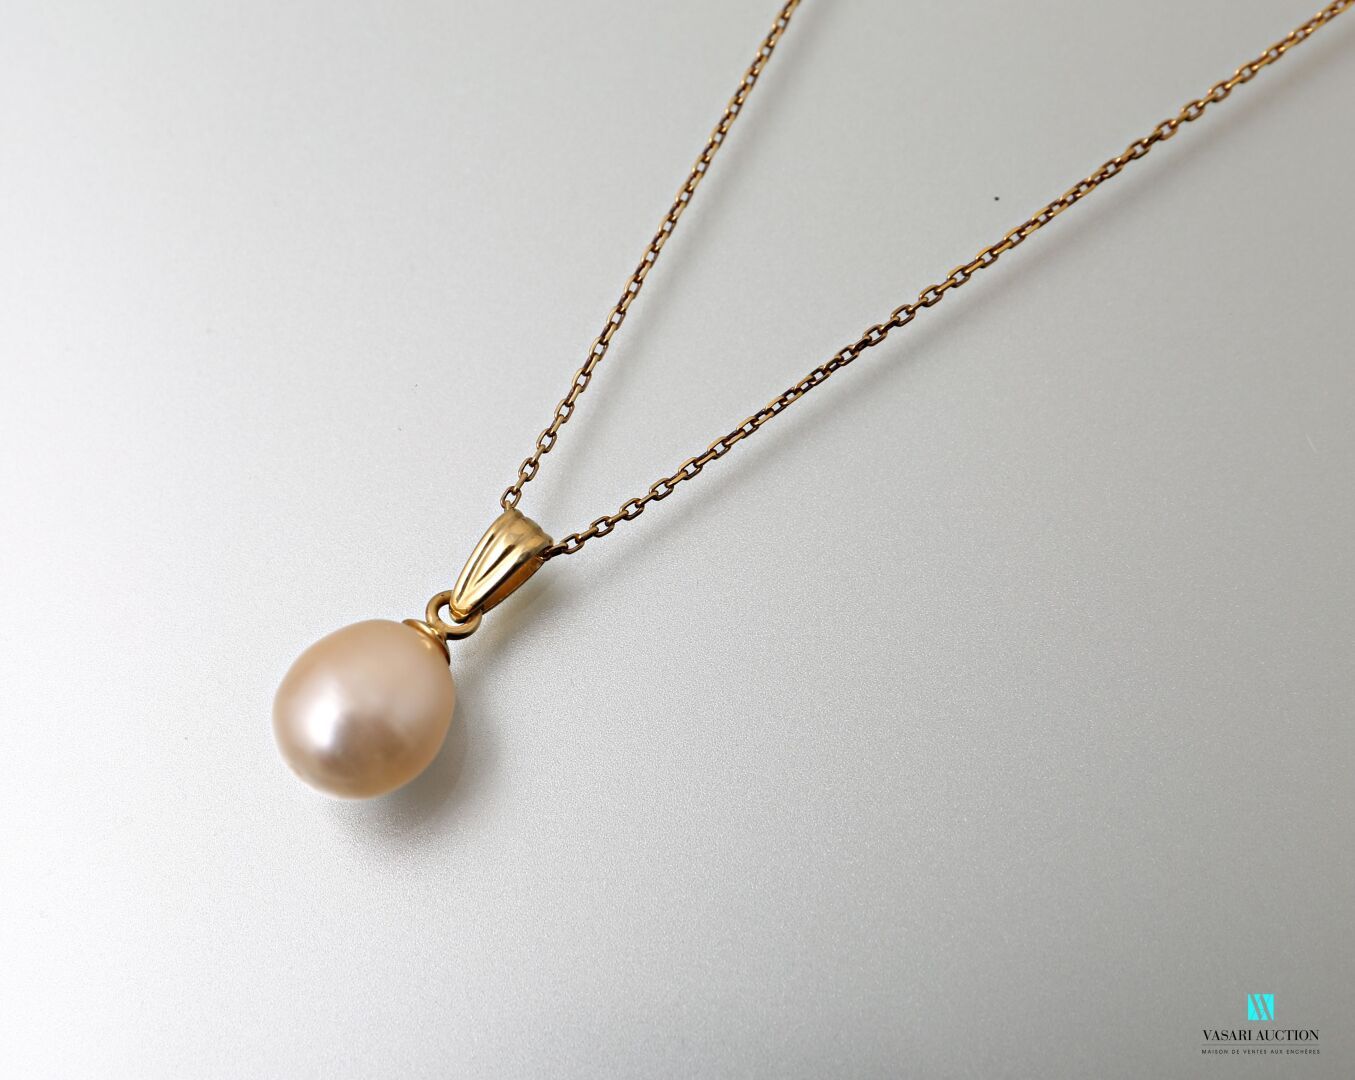 Null 第750000号黄金链和一个装饰有梨形养殖珍珠的吊坠

毛重：6克。链条长度为45厘米。吊坠的长度为2厘米。